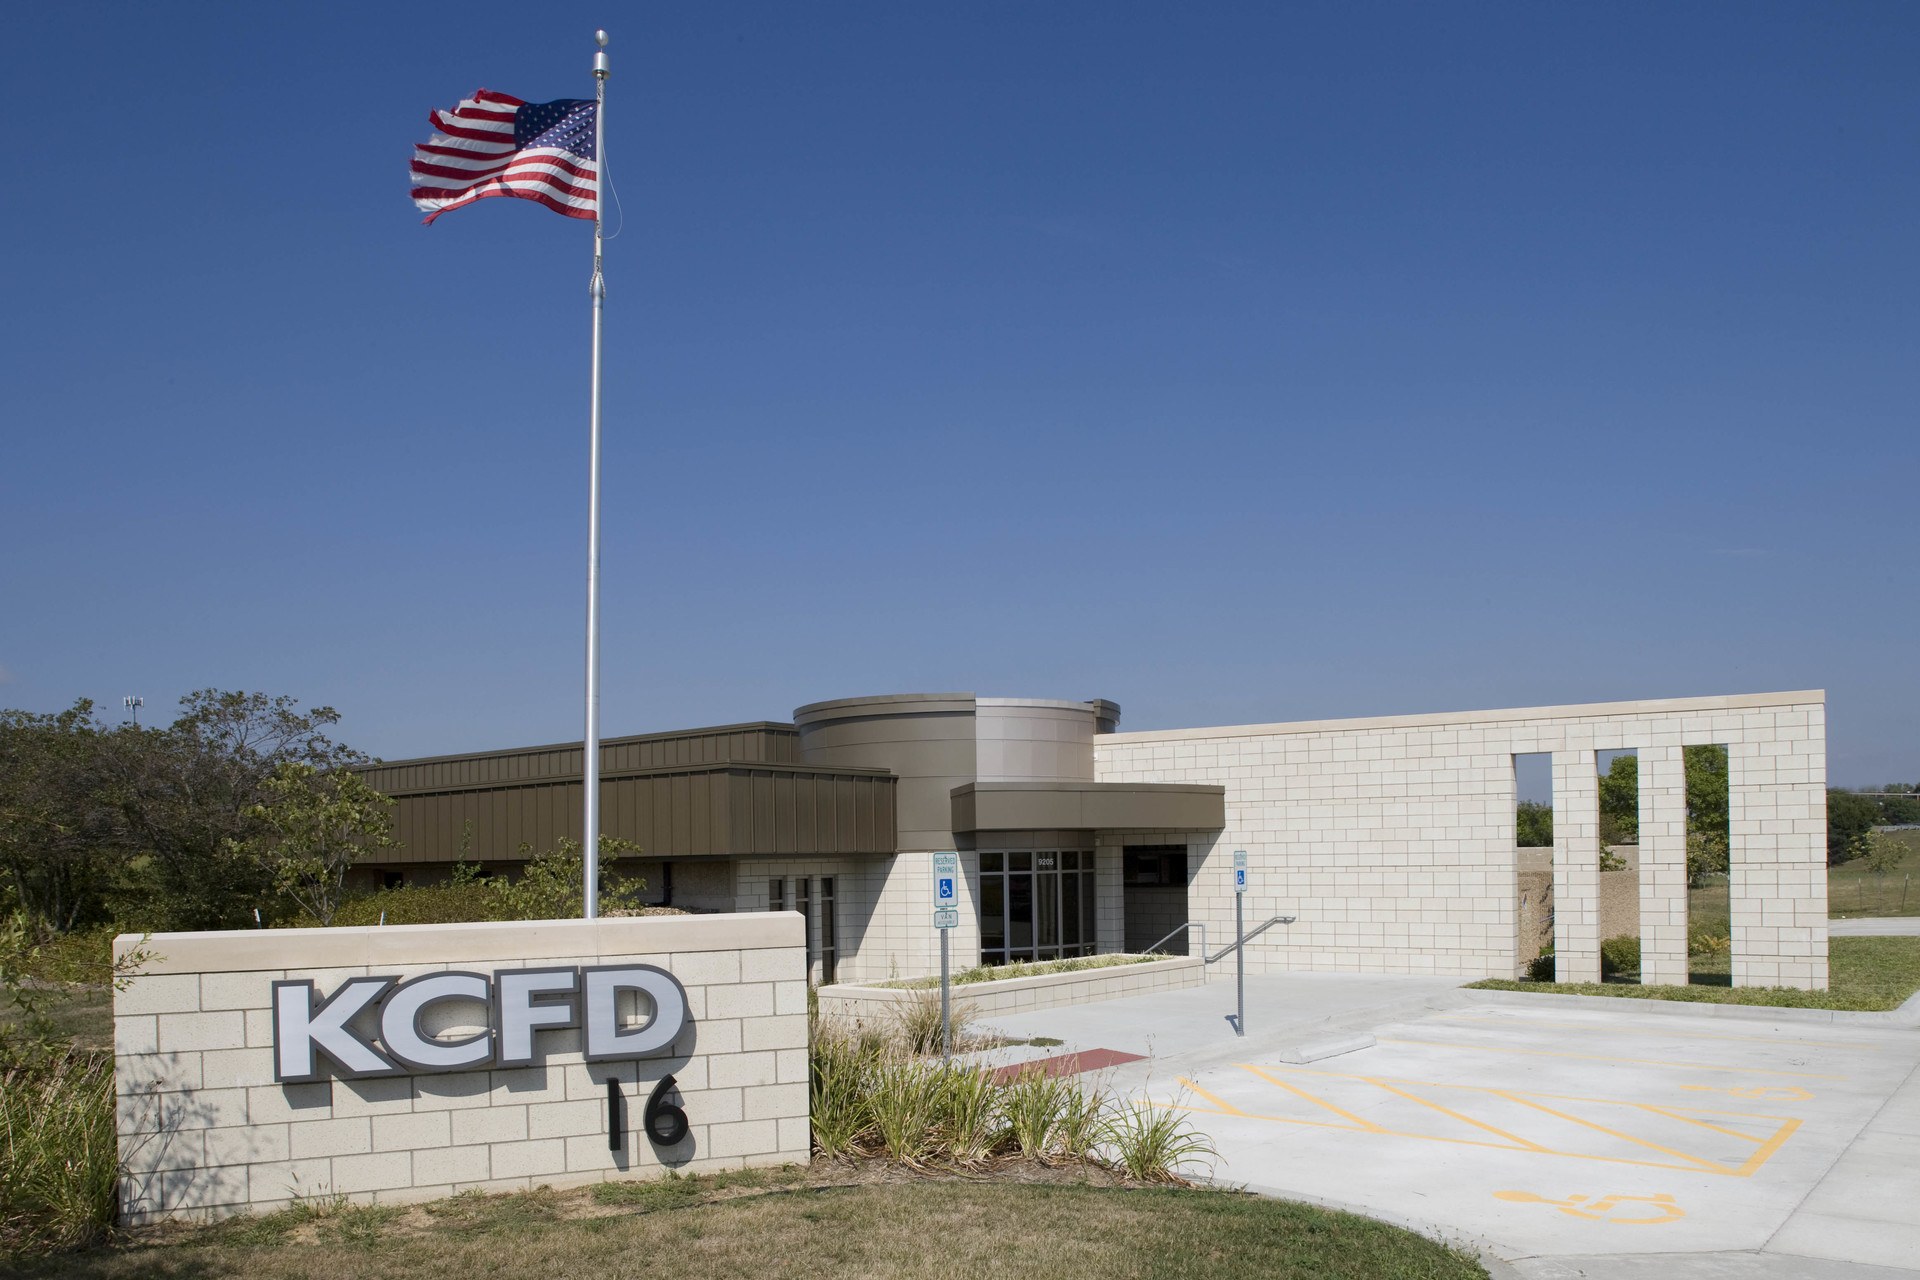 KCFD Fire Station No 16